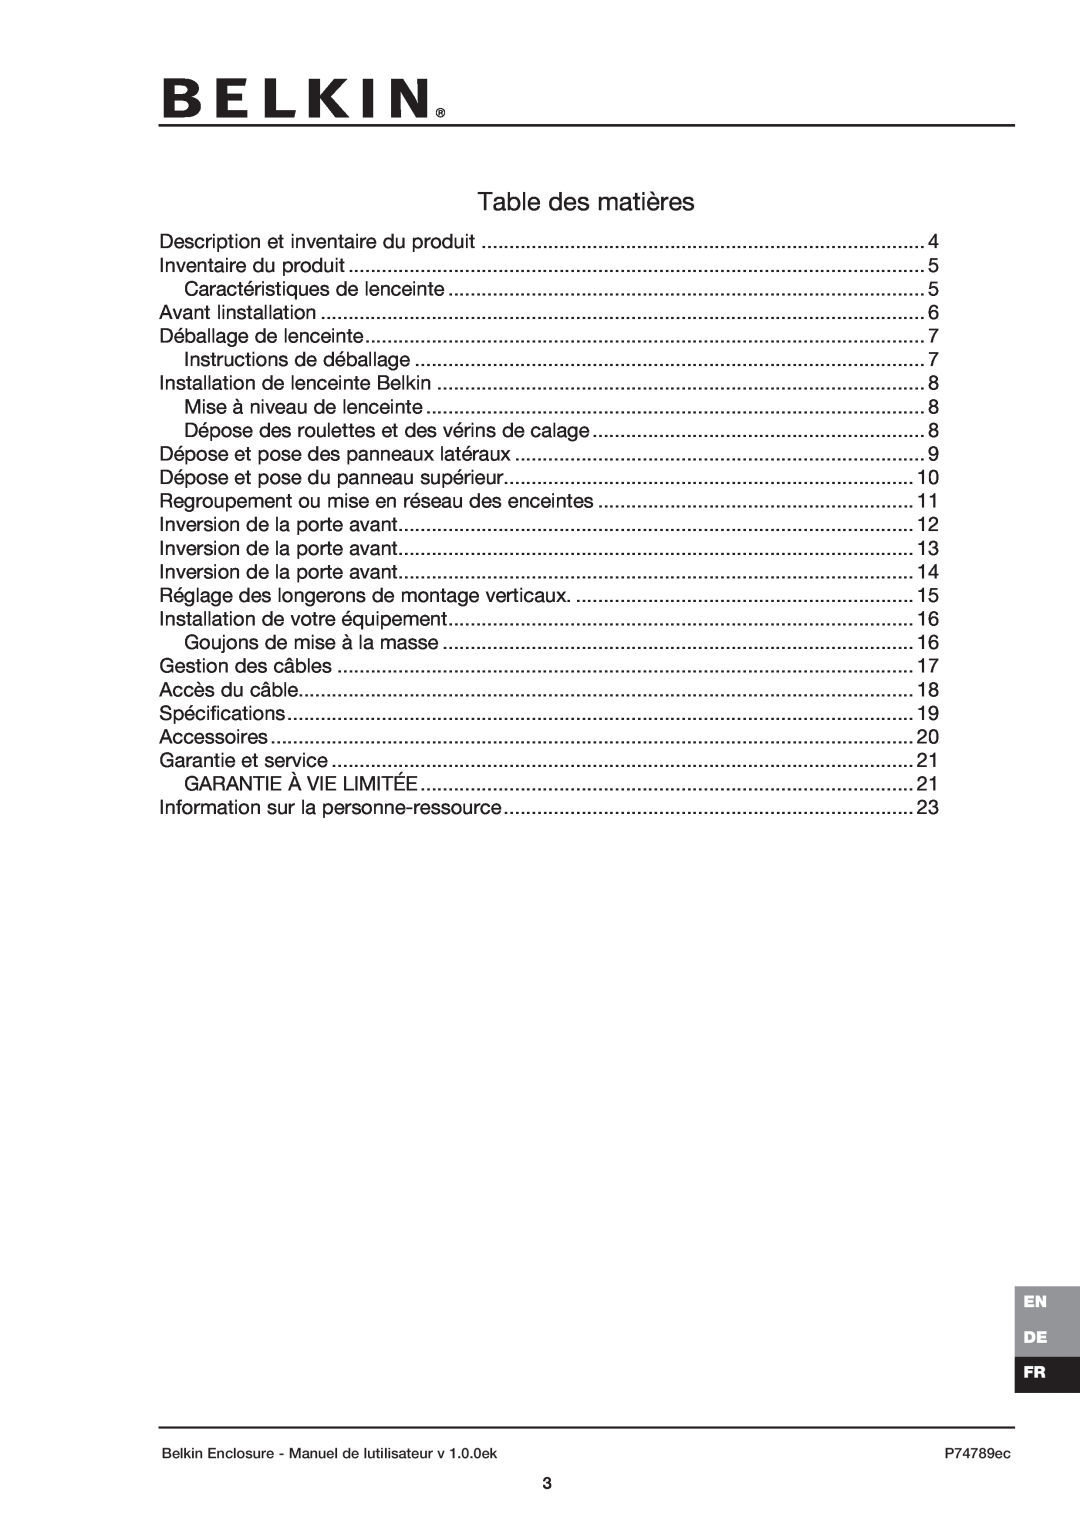 Belkin 42U user manual Table des matières 